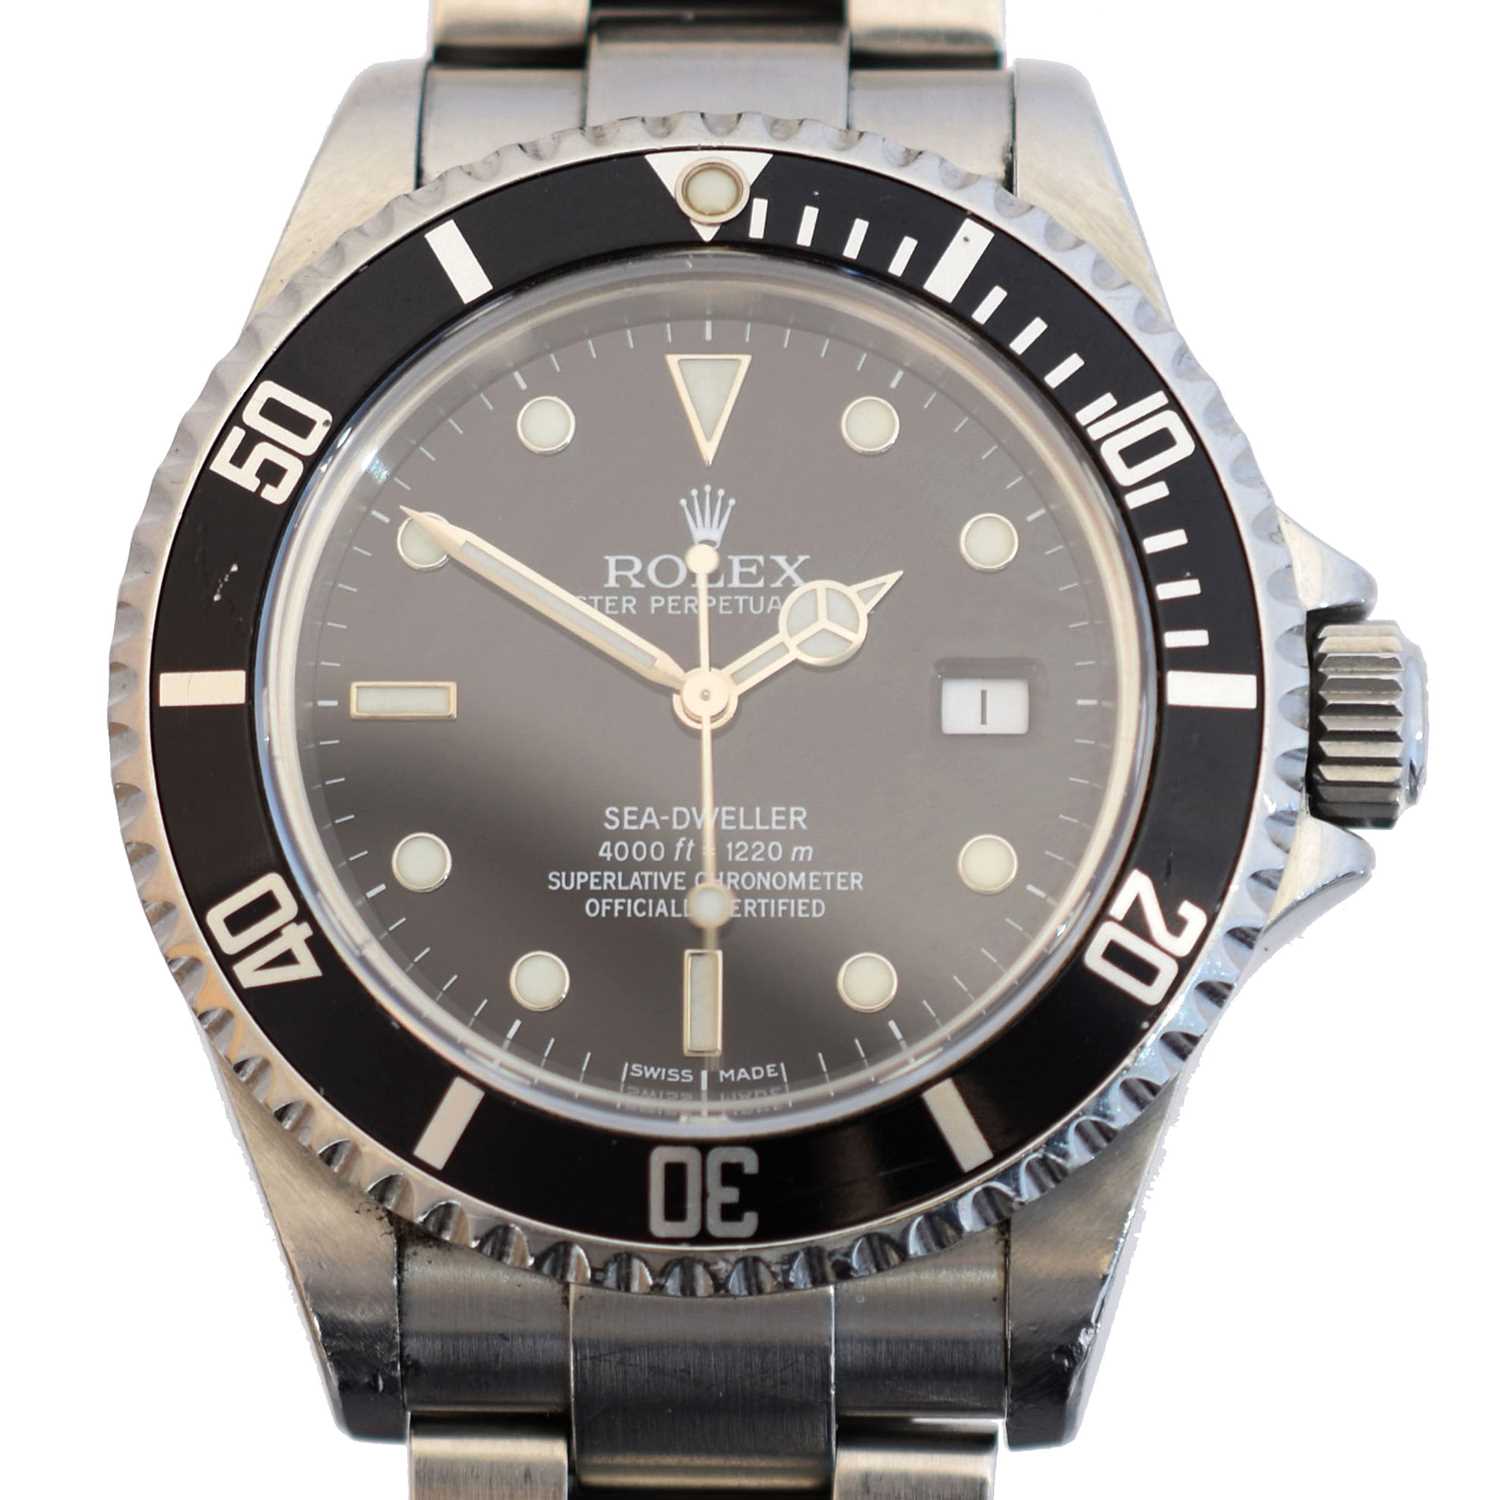 Lot 228 - A Rolex Oyster Perpetual Sea-Dweller wristwatch